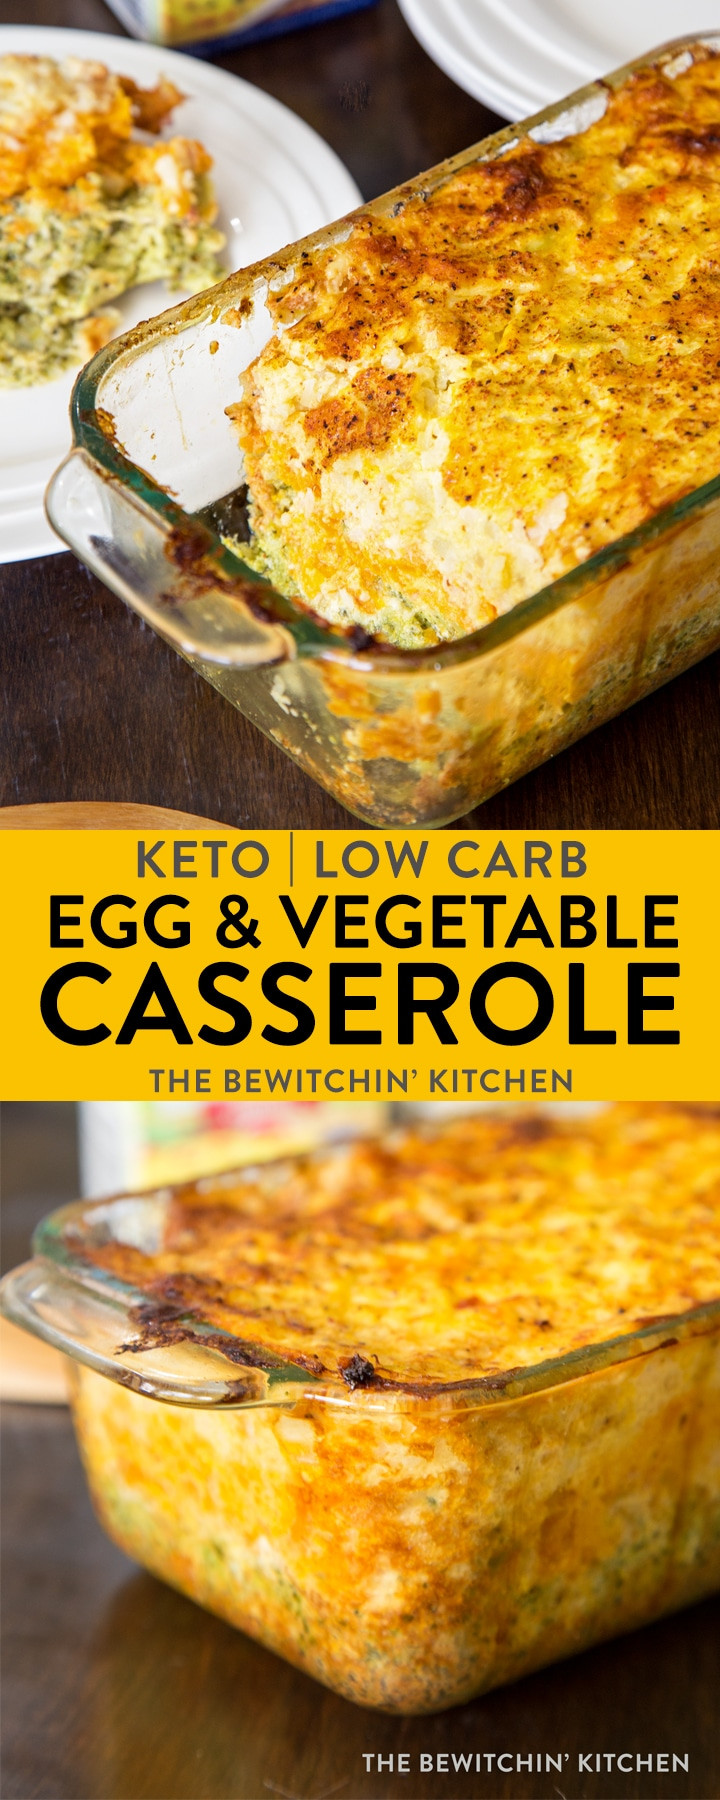 Low Carb Vegetable Casserole Recipes
 Egg Ve able Casserole Bake